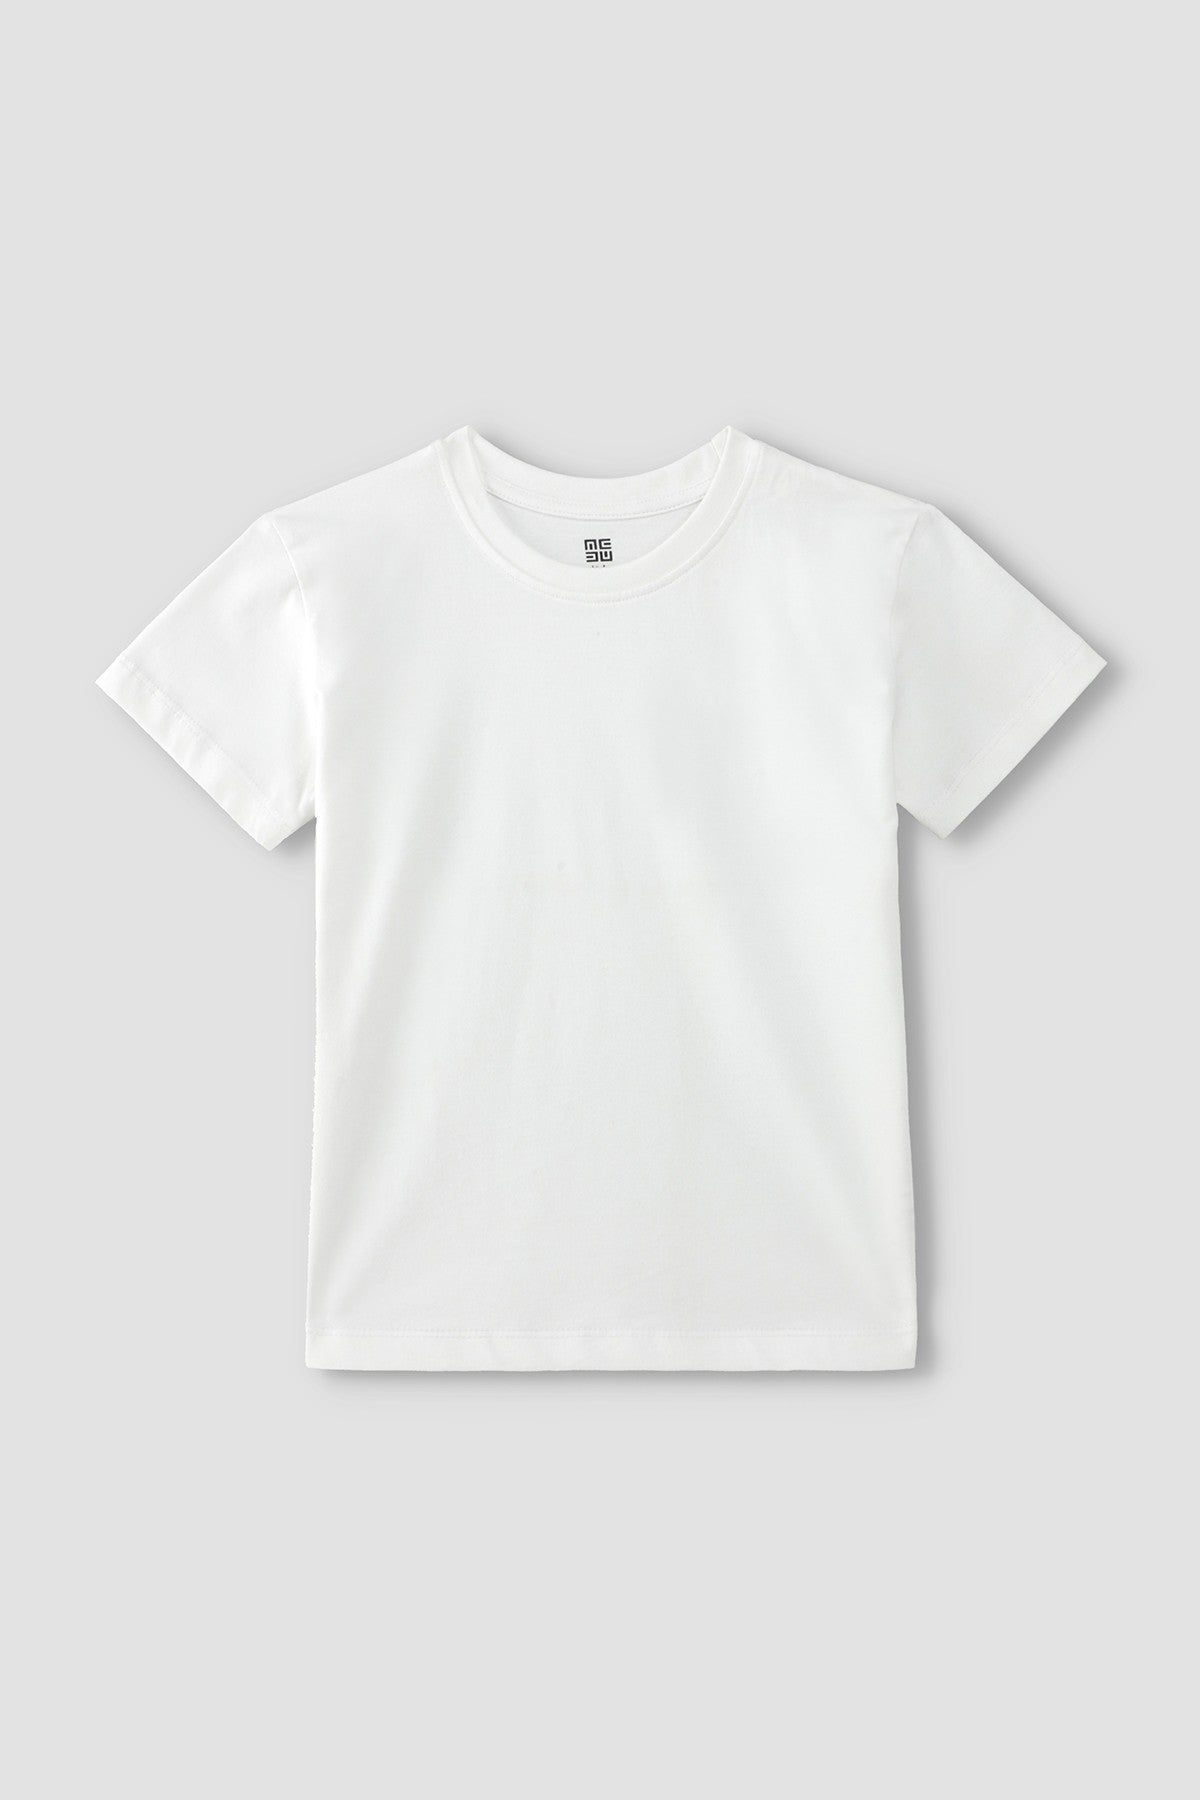 Men White & Black Printed Round Neck Sports T-shirt-1336BK